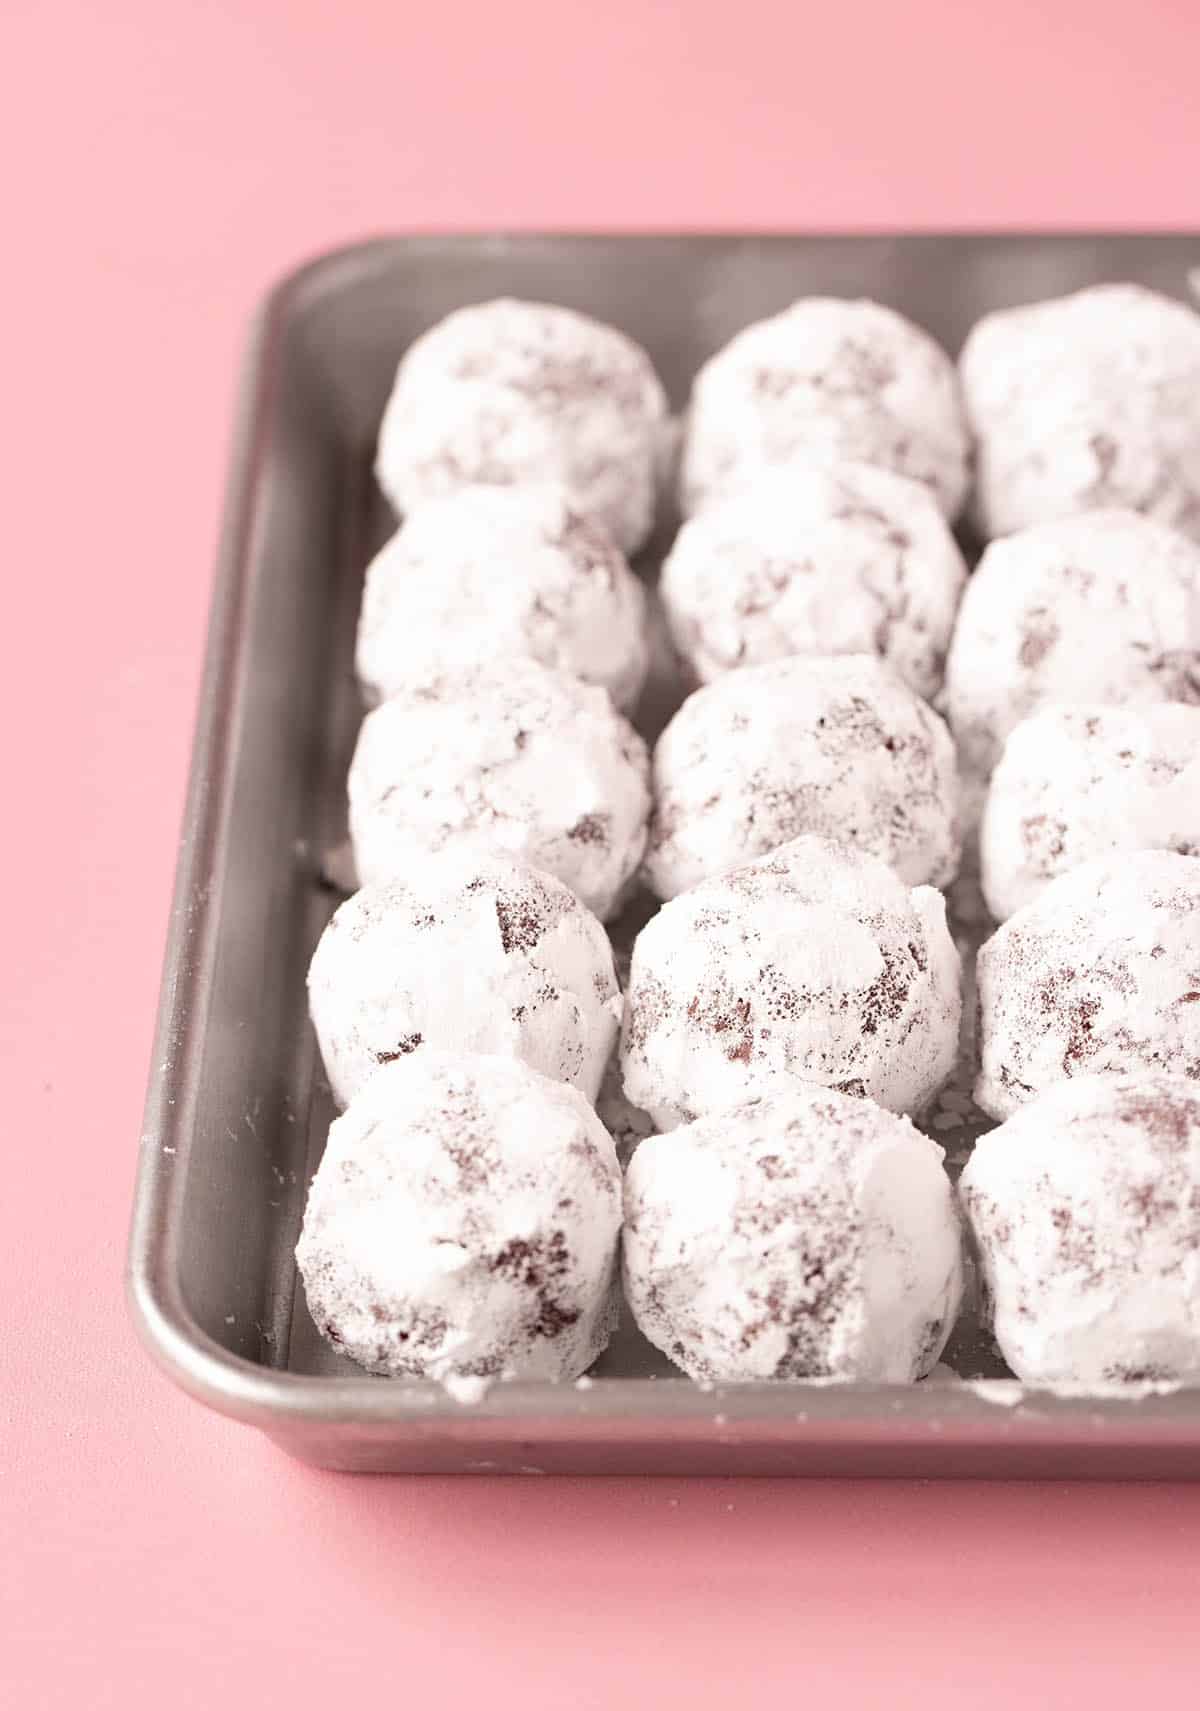 Snow white cookie dough balls in a baking ready to bake.